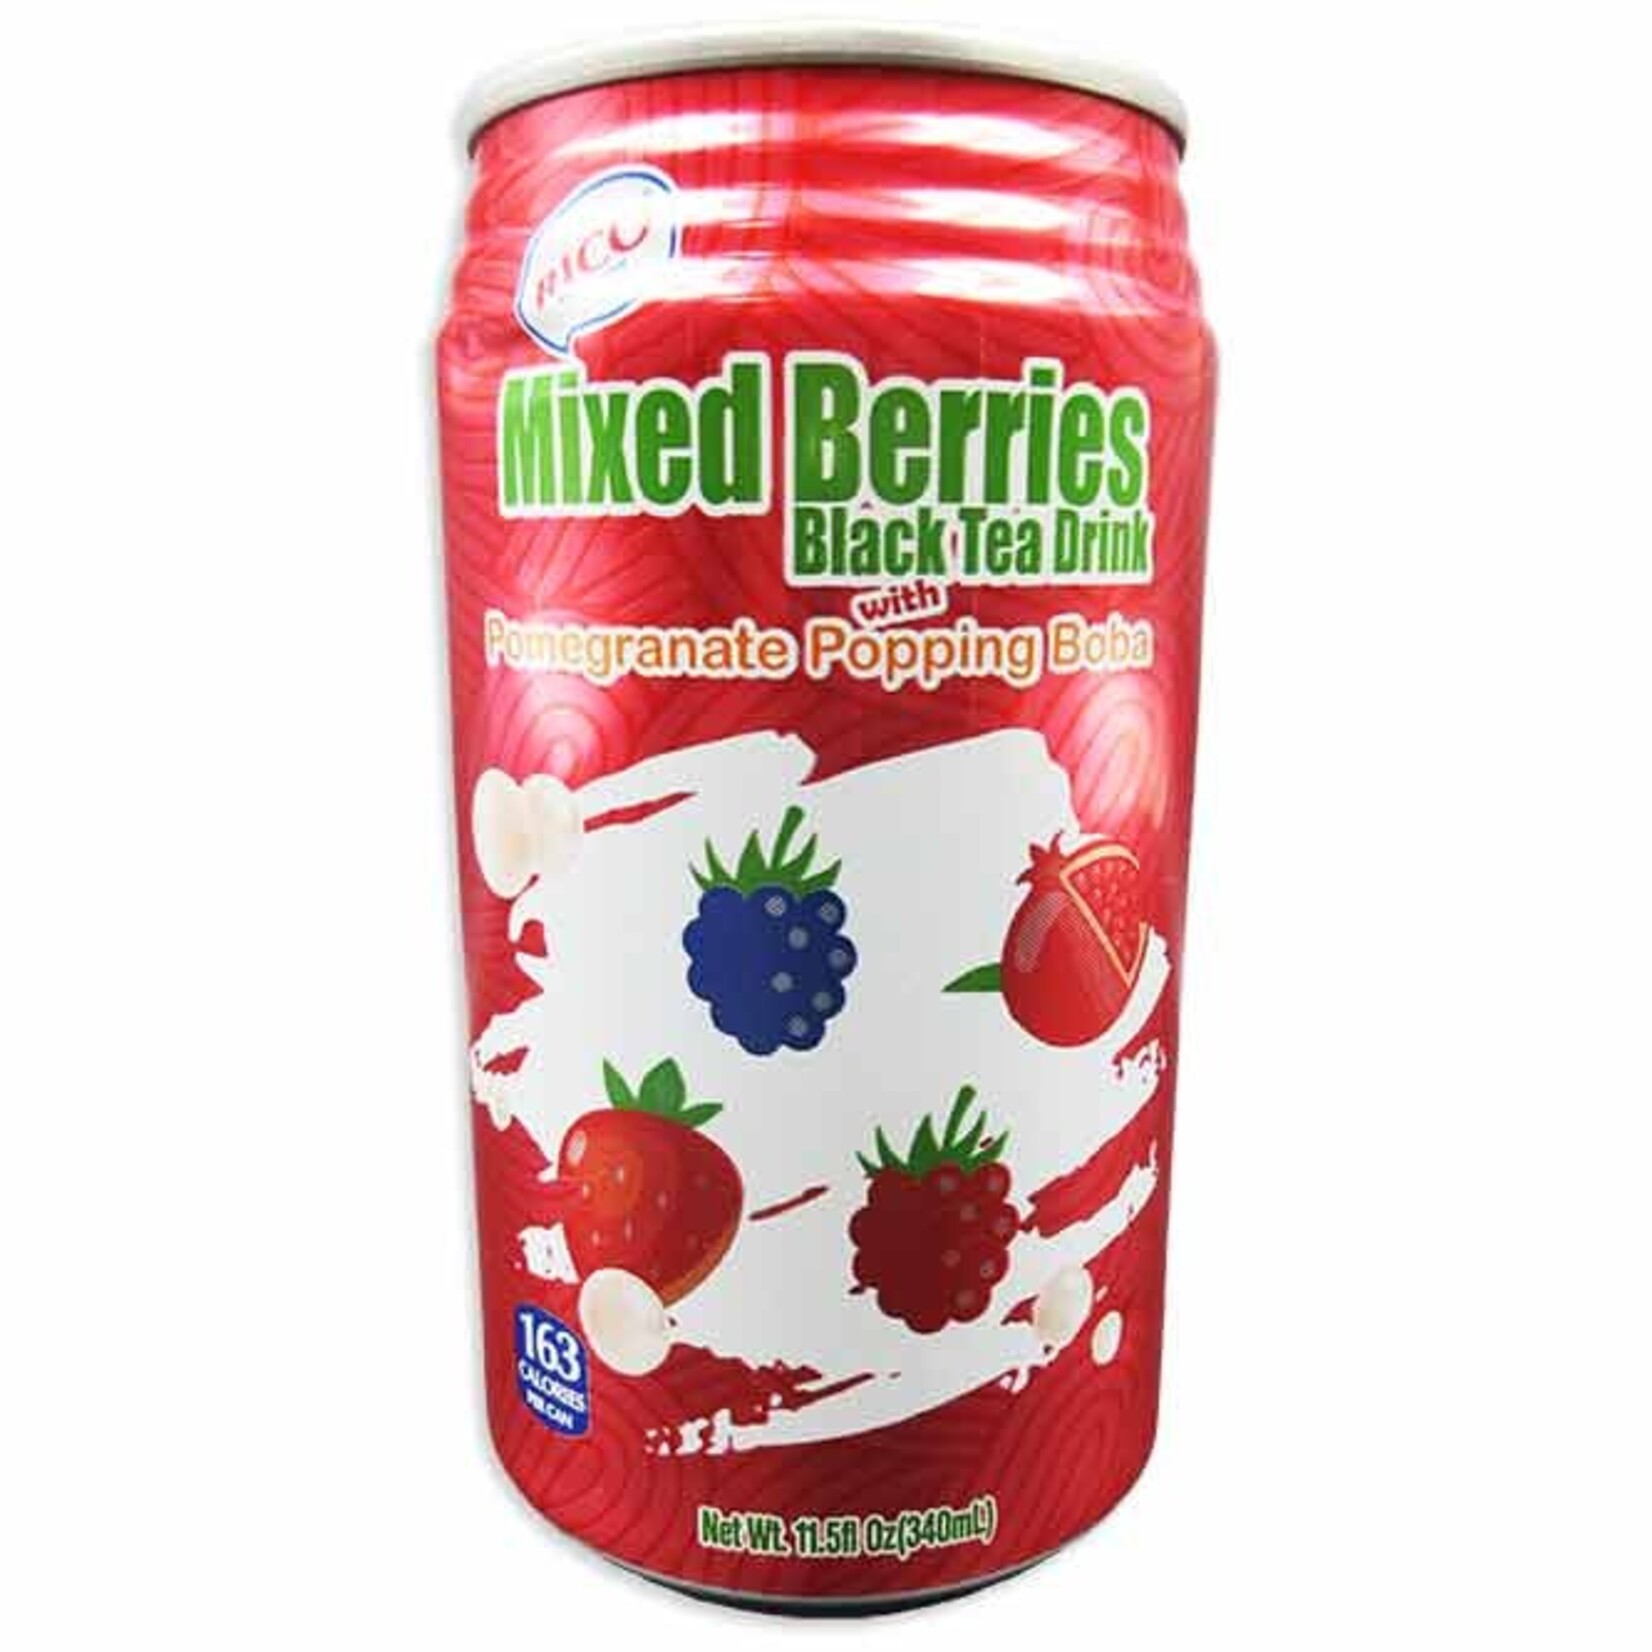 Redstone Mixed Berries Black Tea - Pomegranate Boba